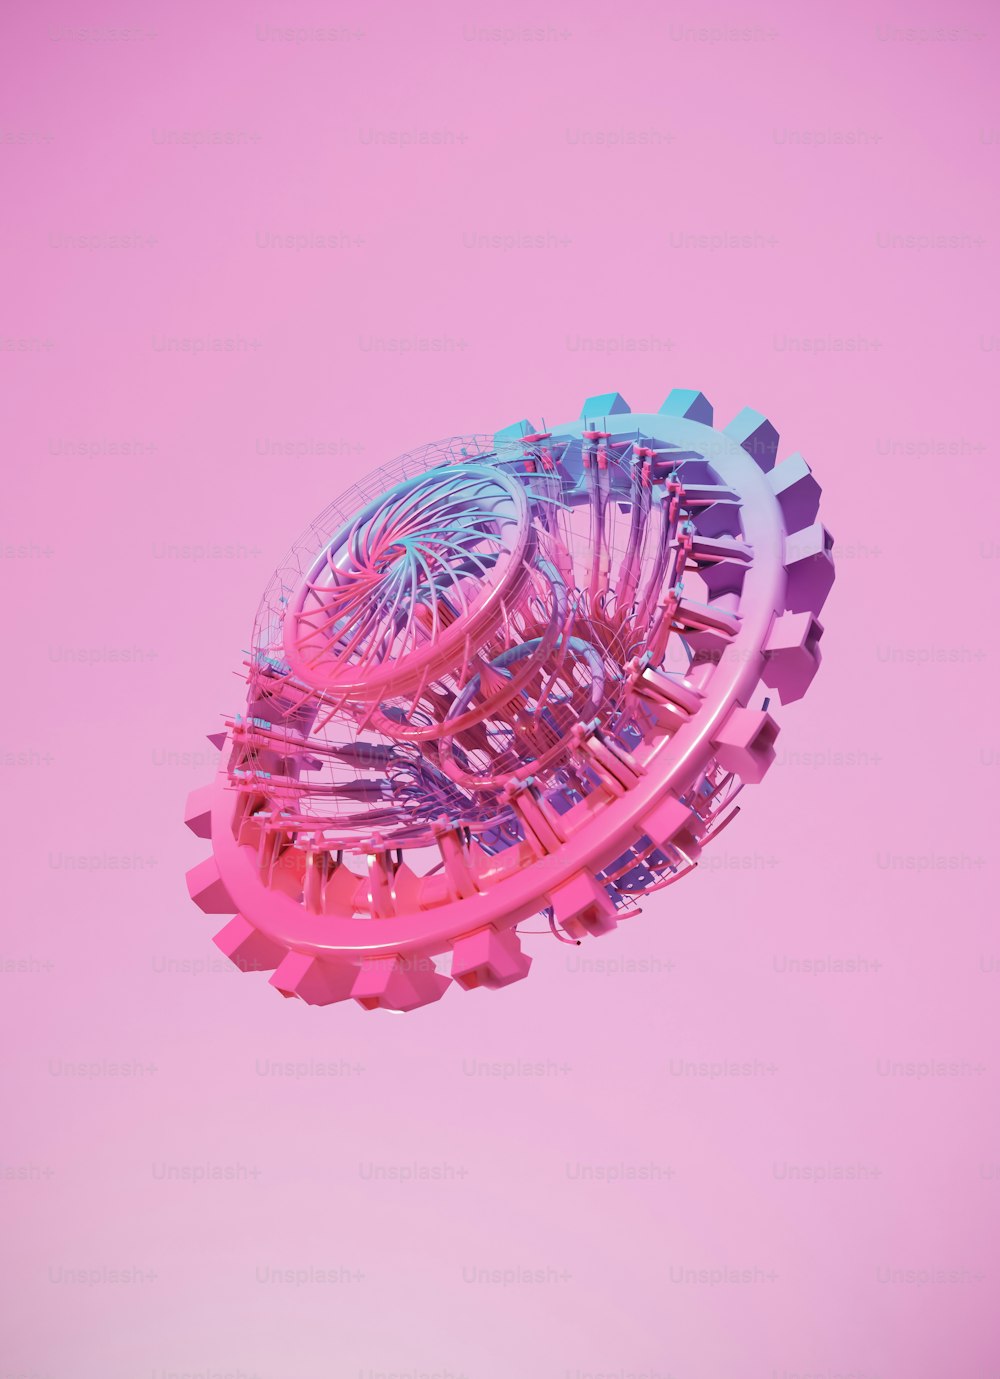 Un objeto circular púrpura y rosa